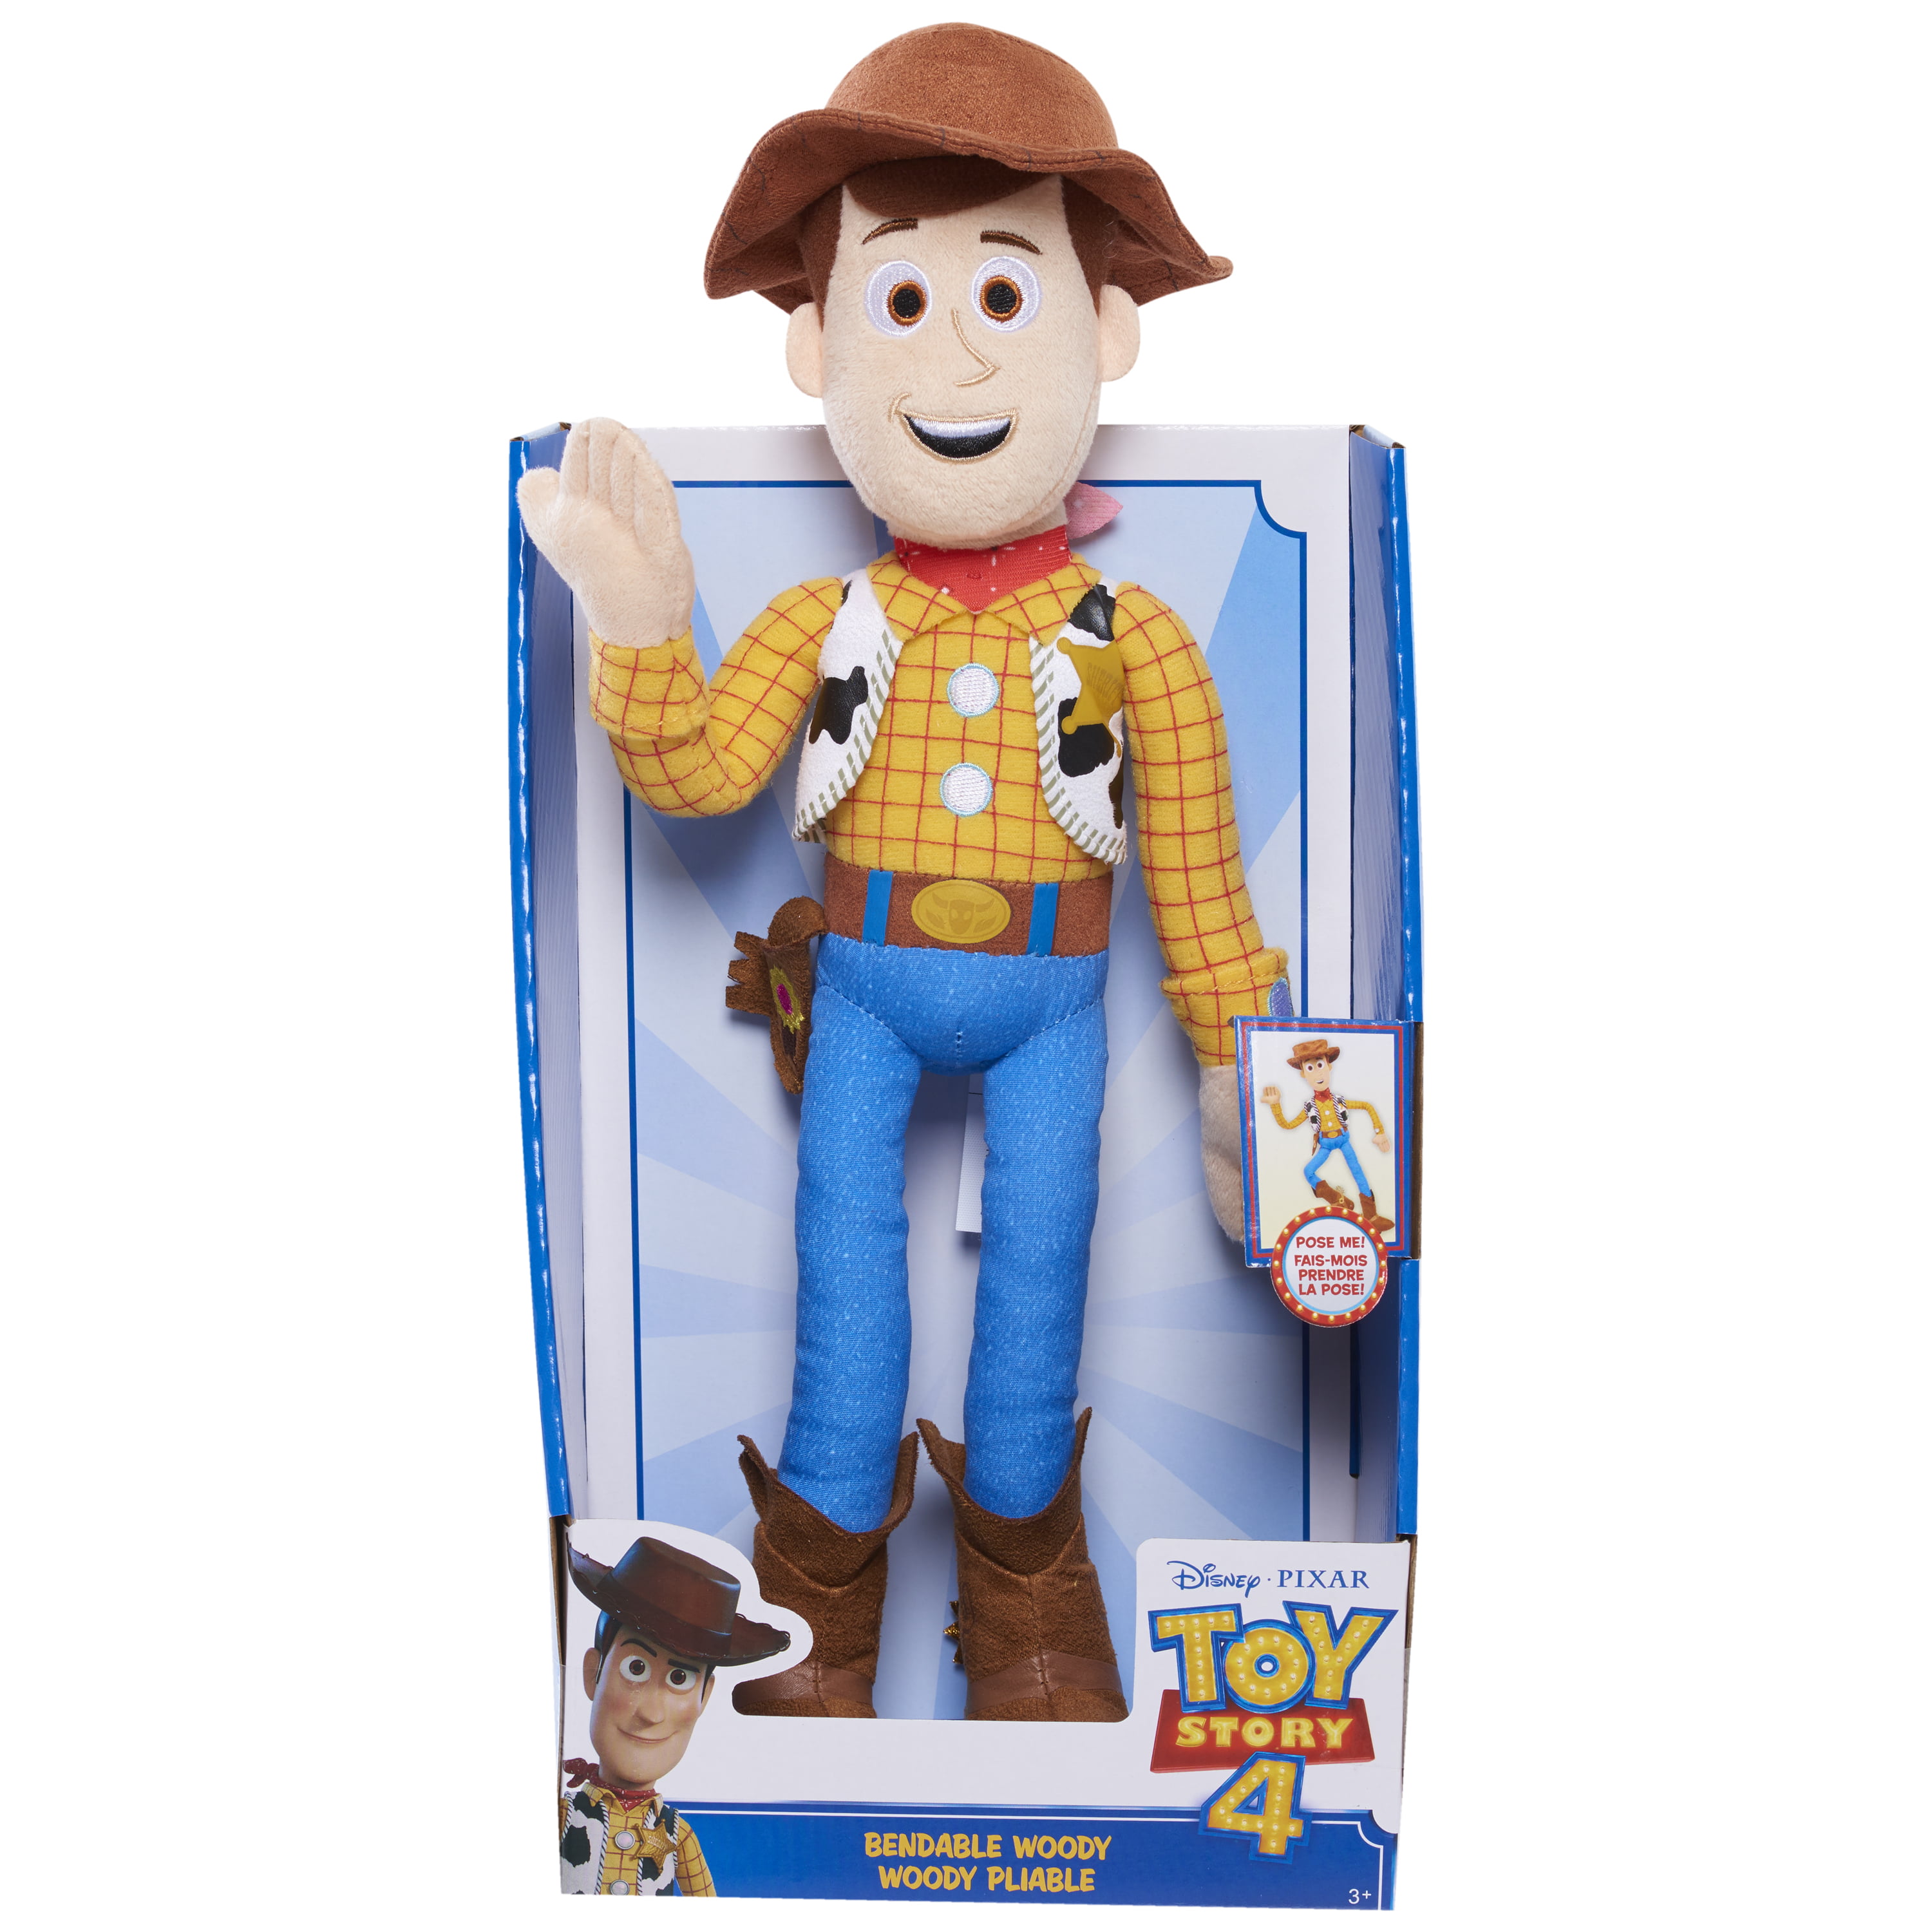 Disney•Pixar's Toy Story 4 Bendable Plush -Woody - Walmart.com